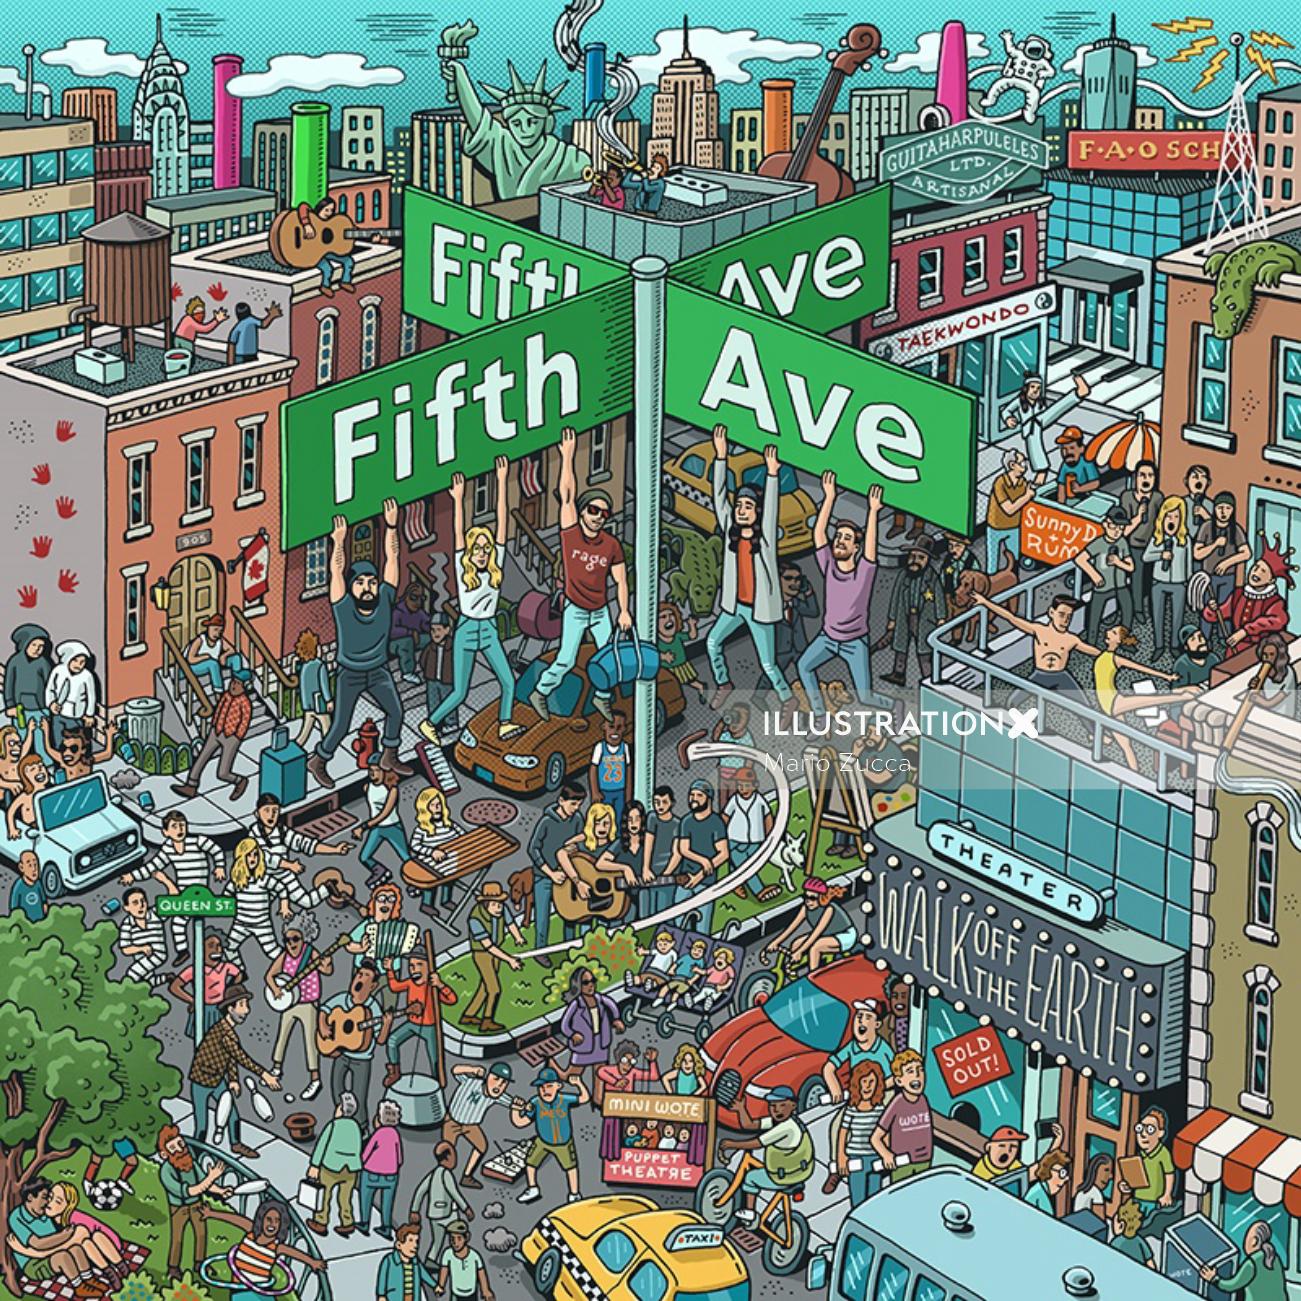 Fifth Ave Album Artwork Illustration 